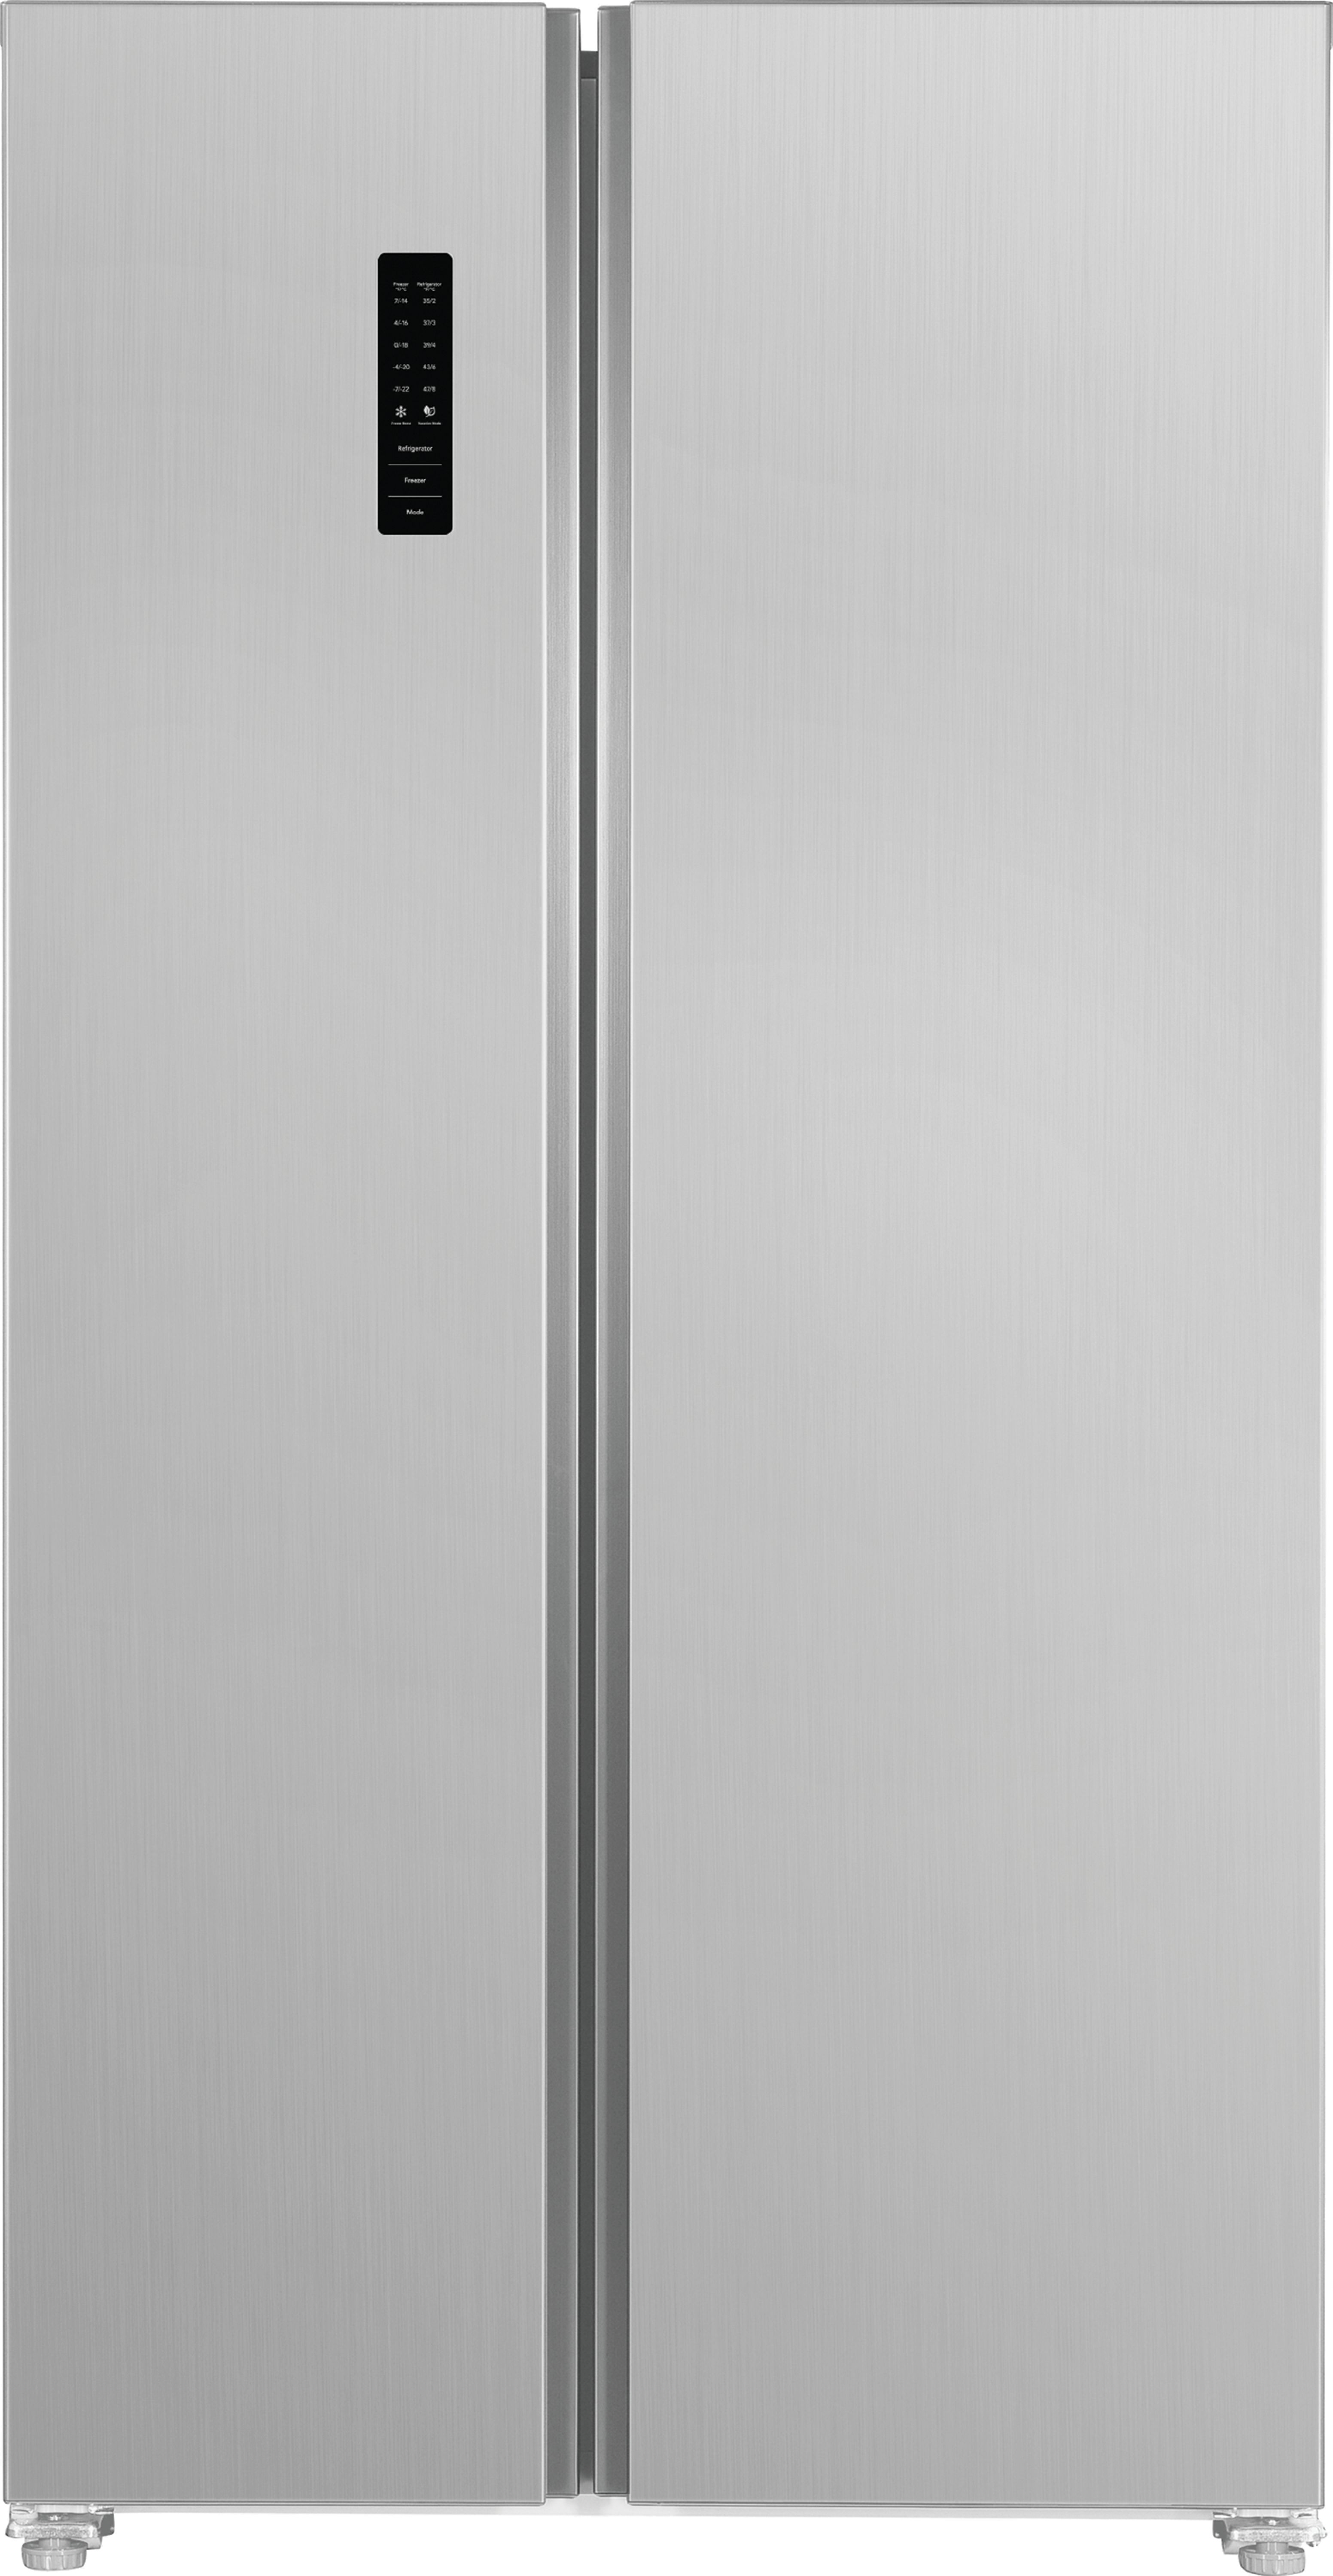 Frigidaire® 18.8 Cu. Ft. Brushed Steel Counter Depth Side-by-Side Refrigerator